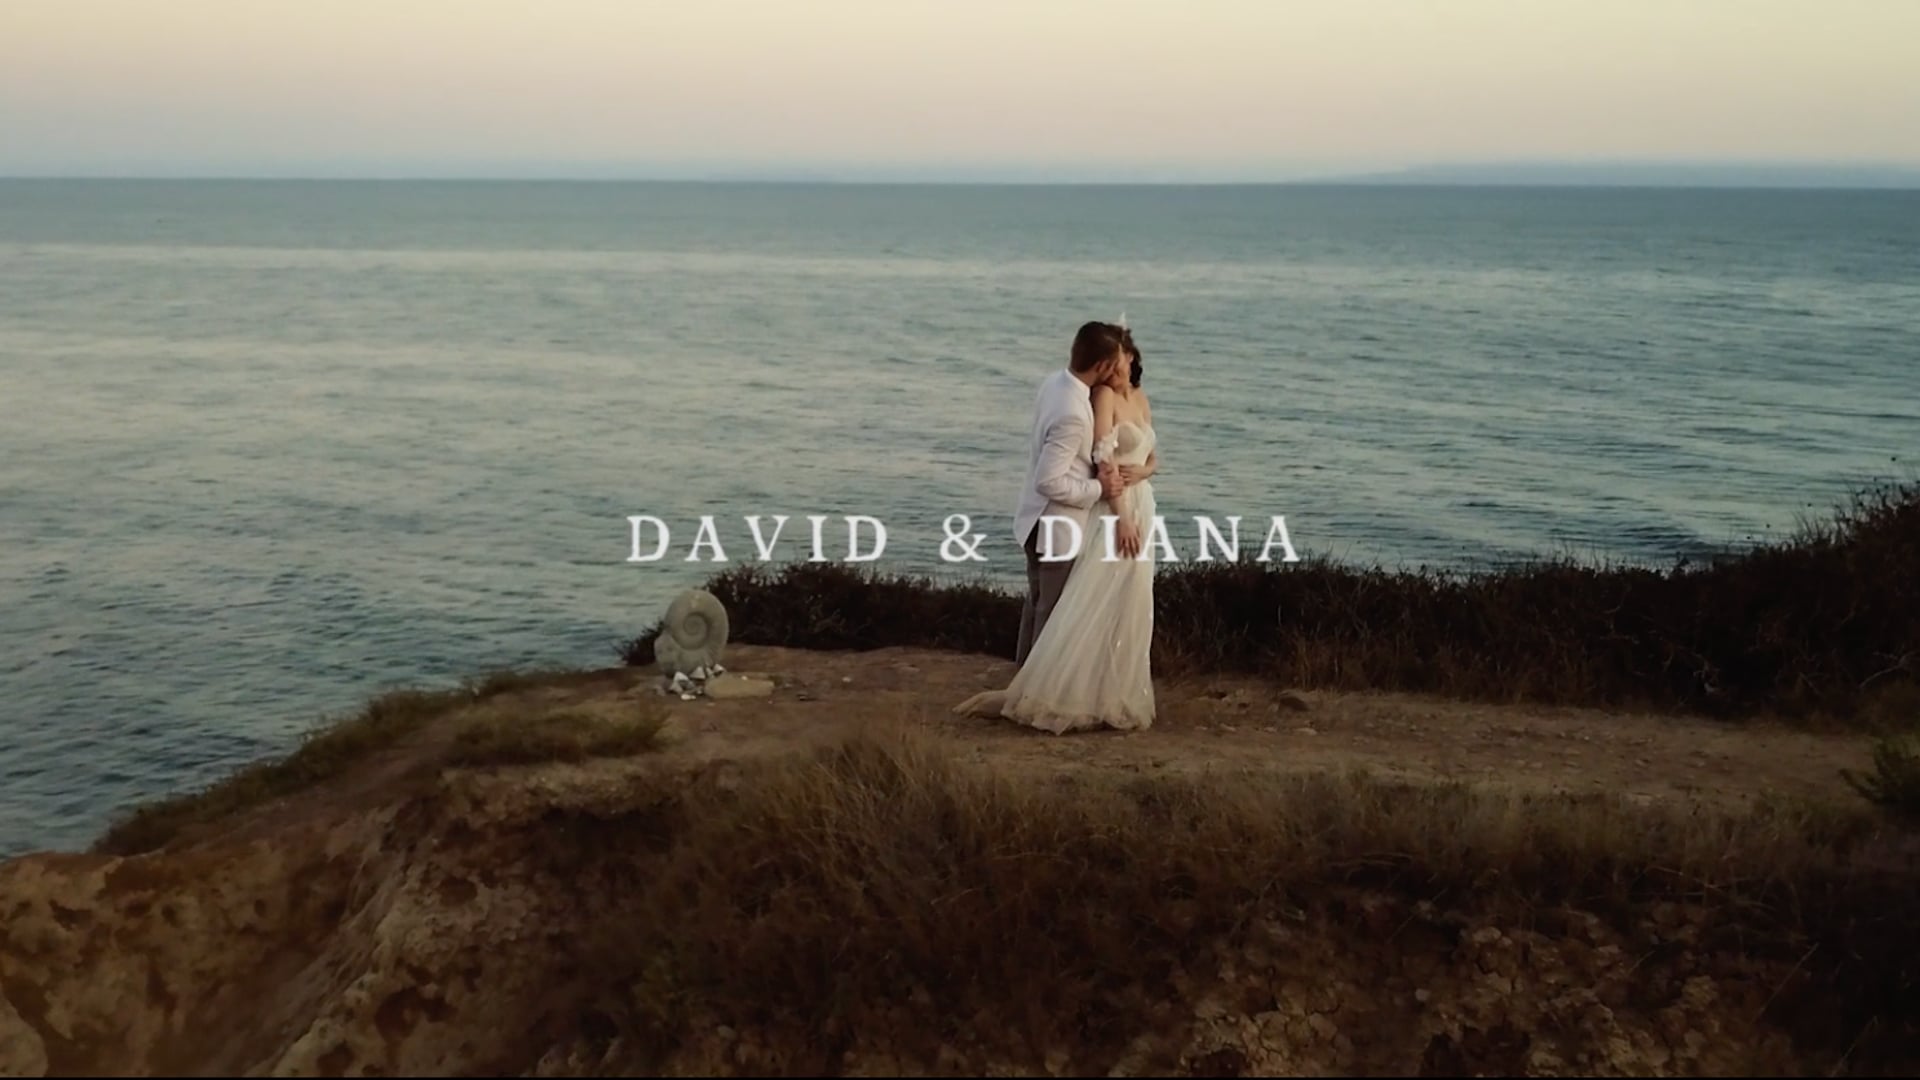 David & Diana - Highlight Film